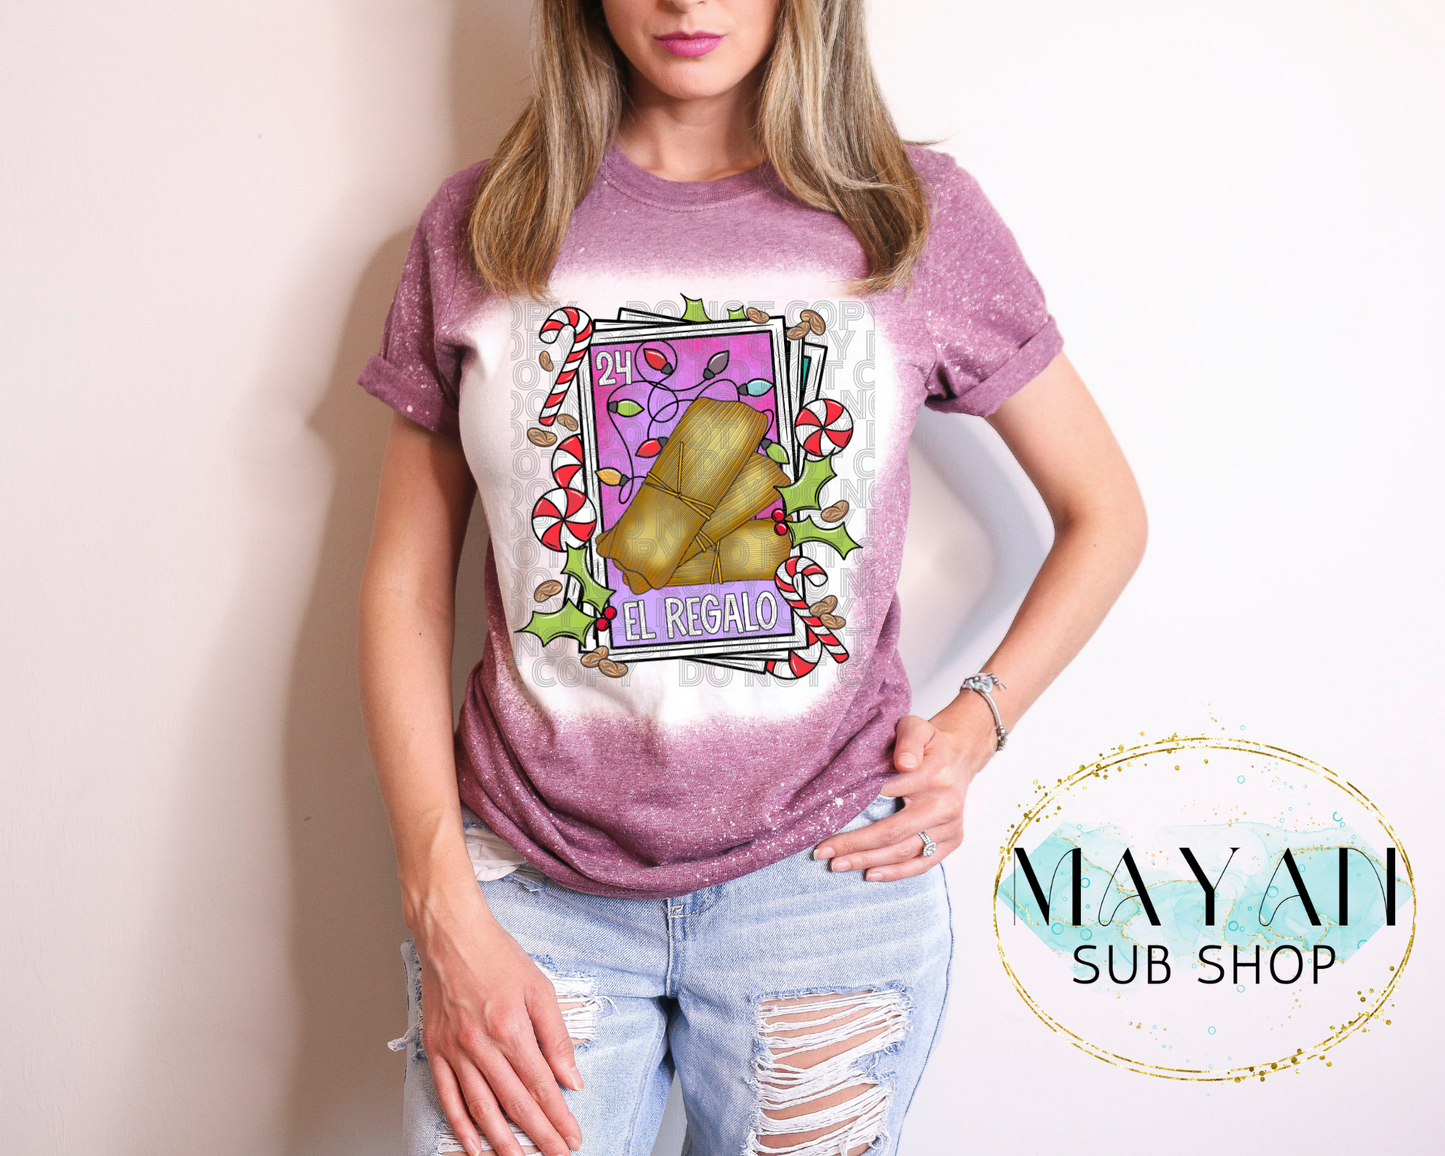 El regalo in heather maroon bleached shirt. -Mayan Sub Shop